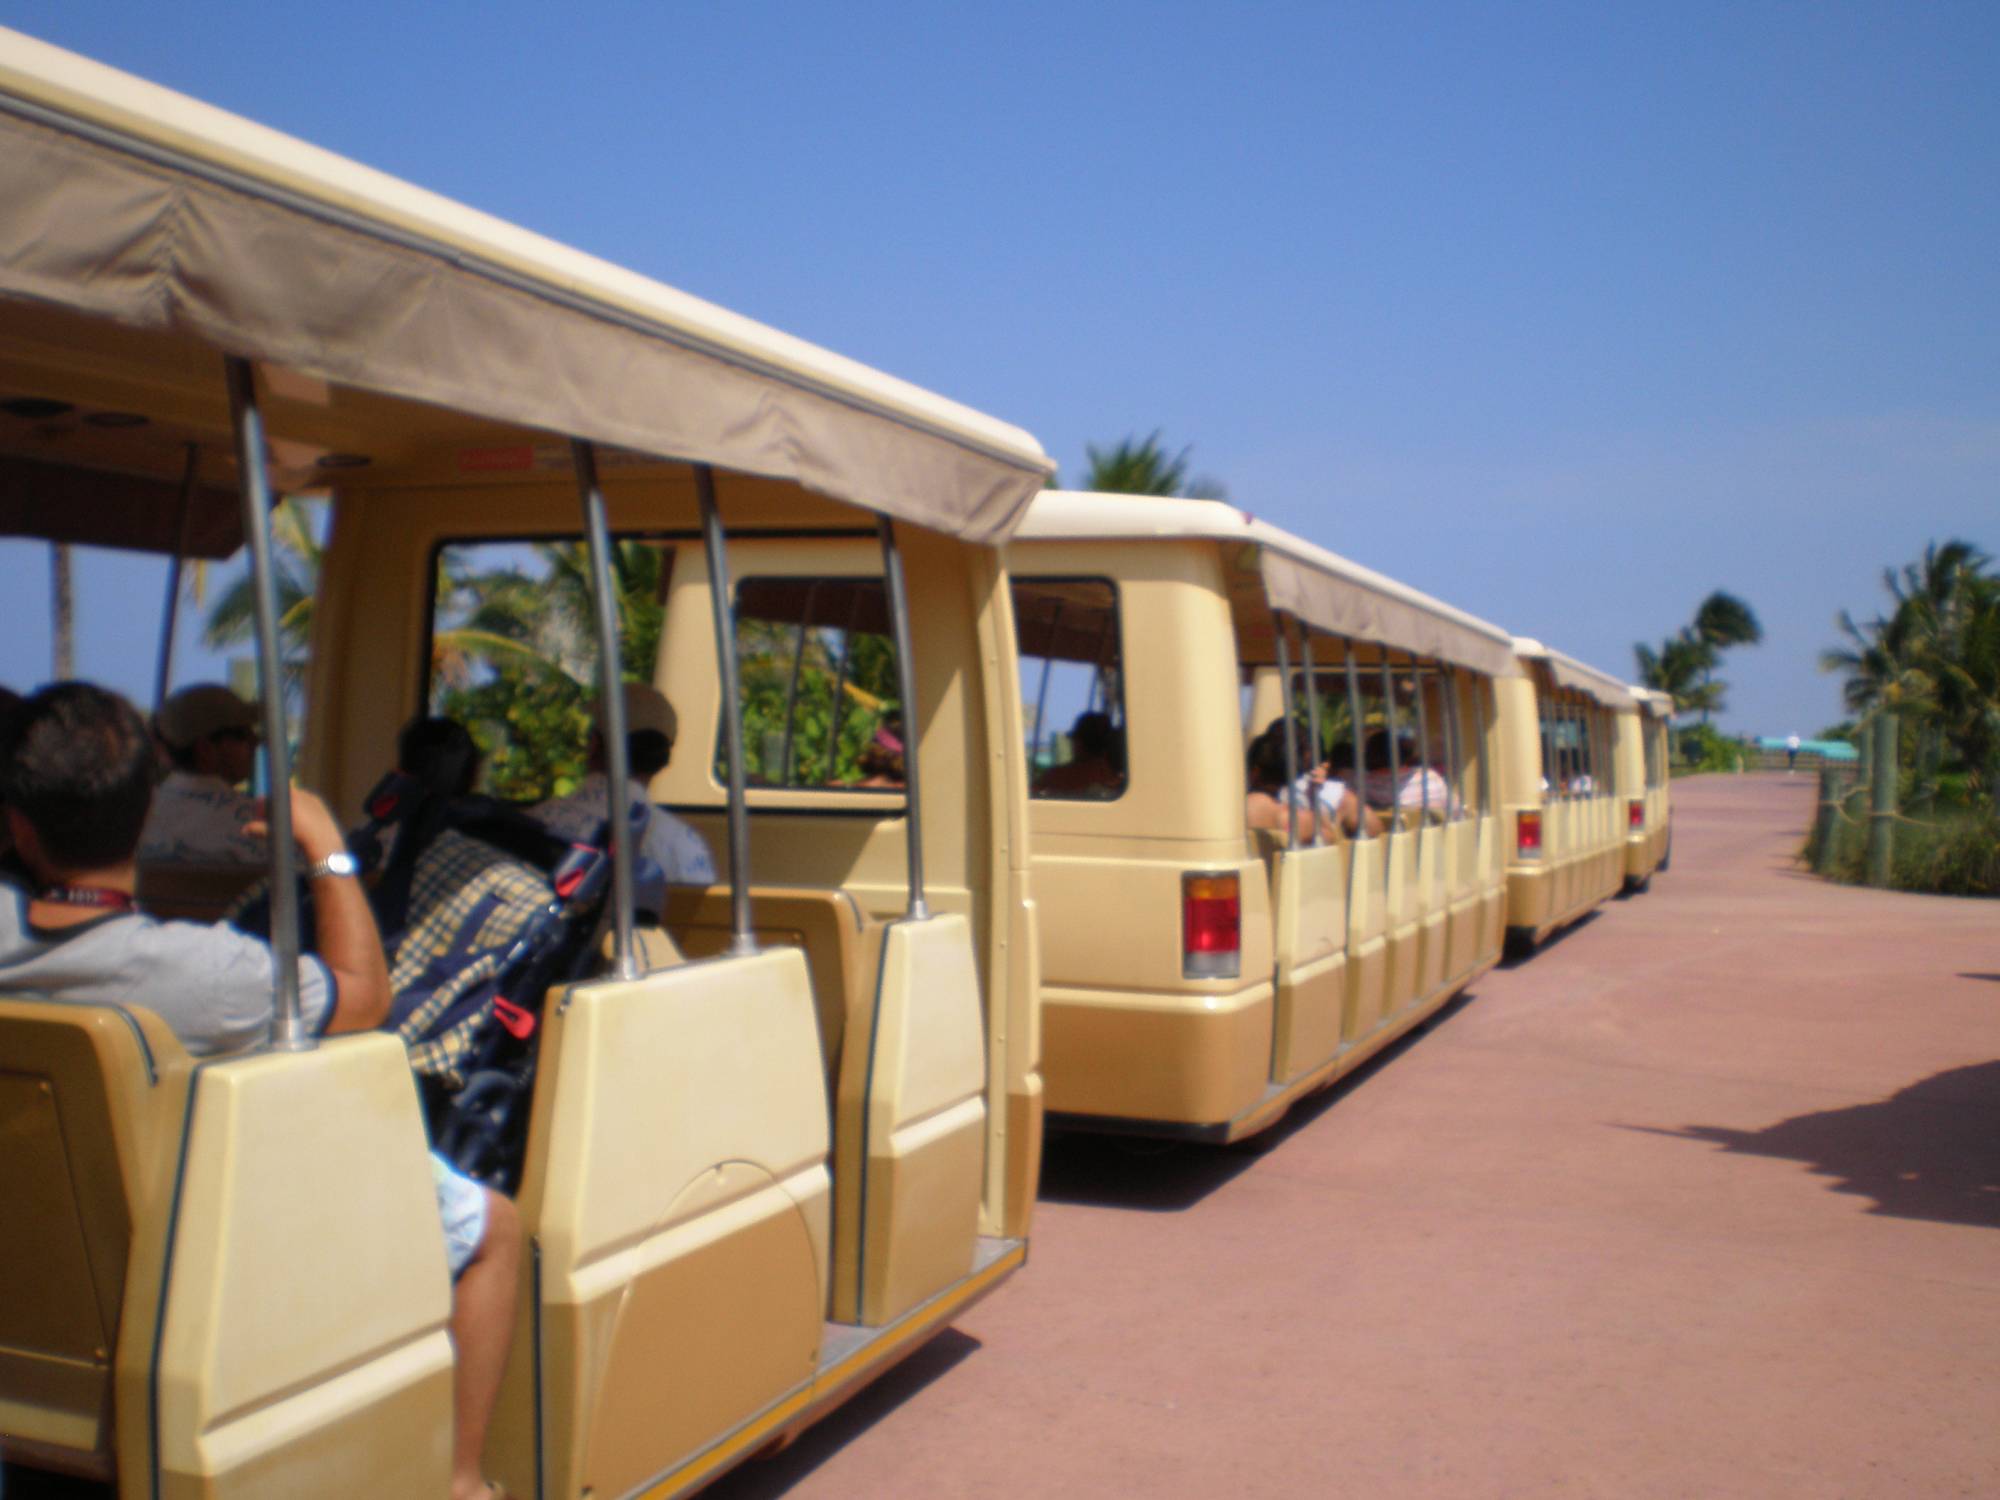 Tram to Family Beach at Castaway Cay